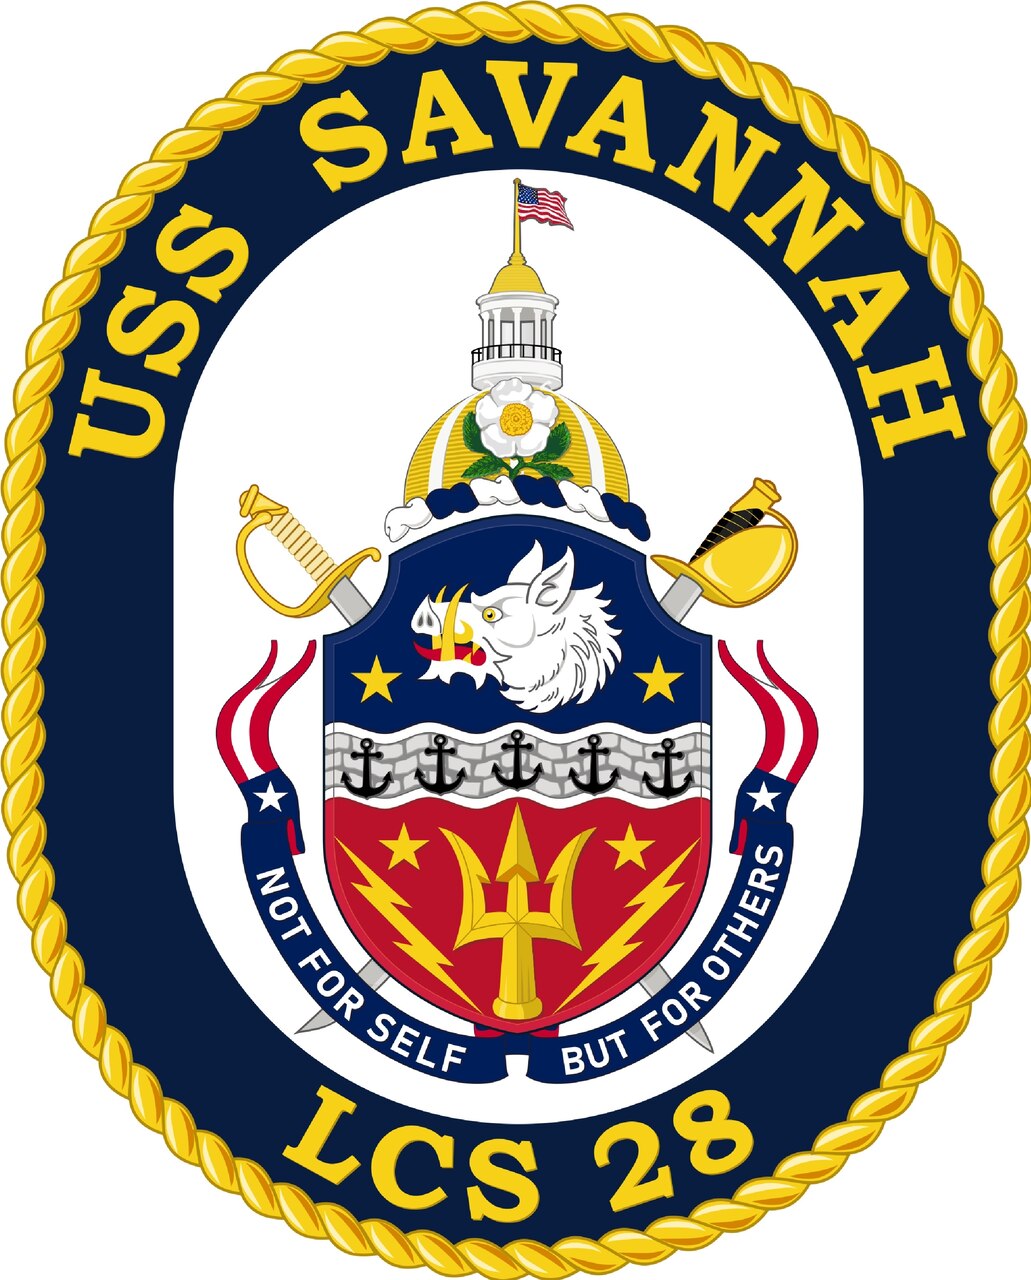 USS Savannah (LCS 28)